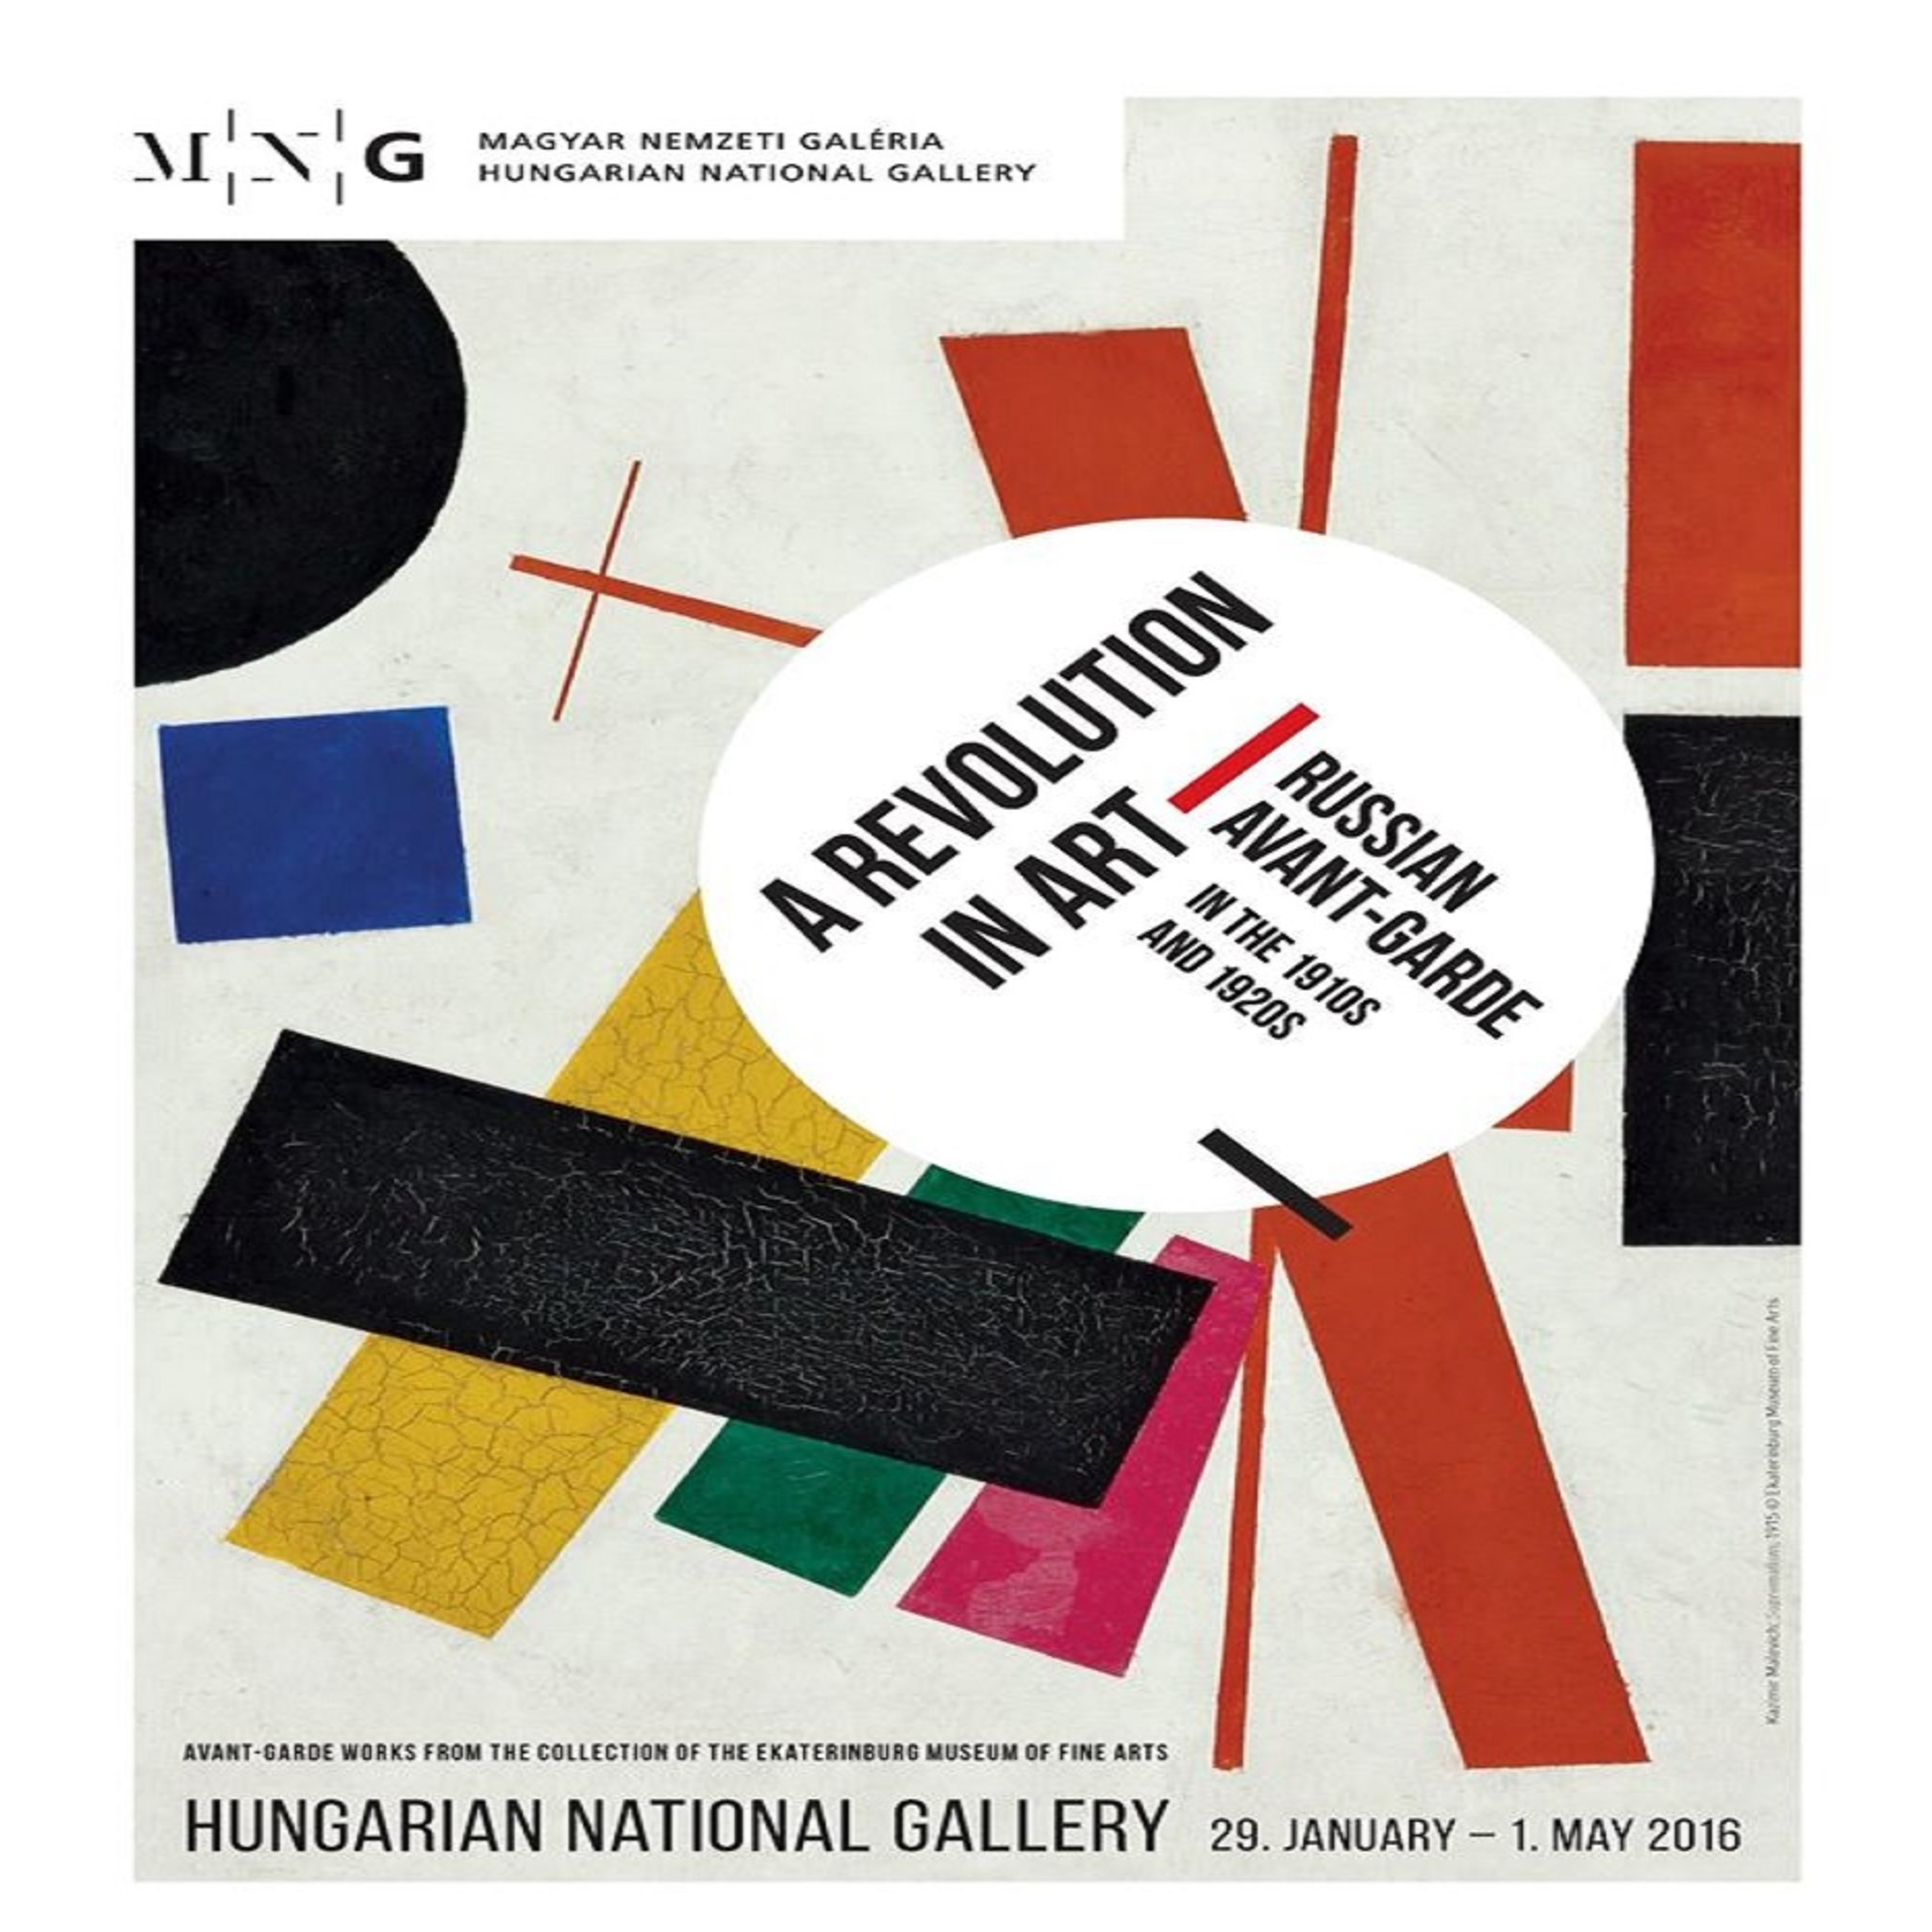 The exhibition Revolution in art